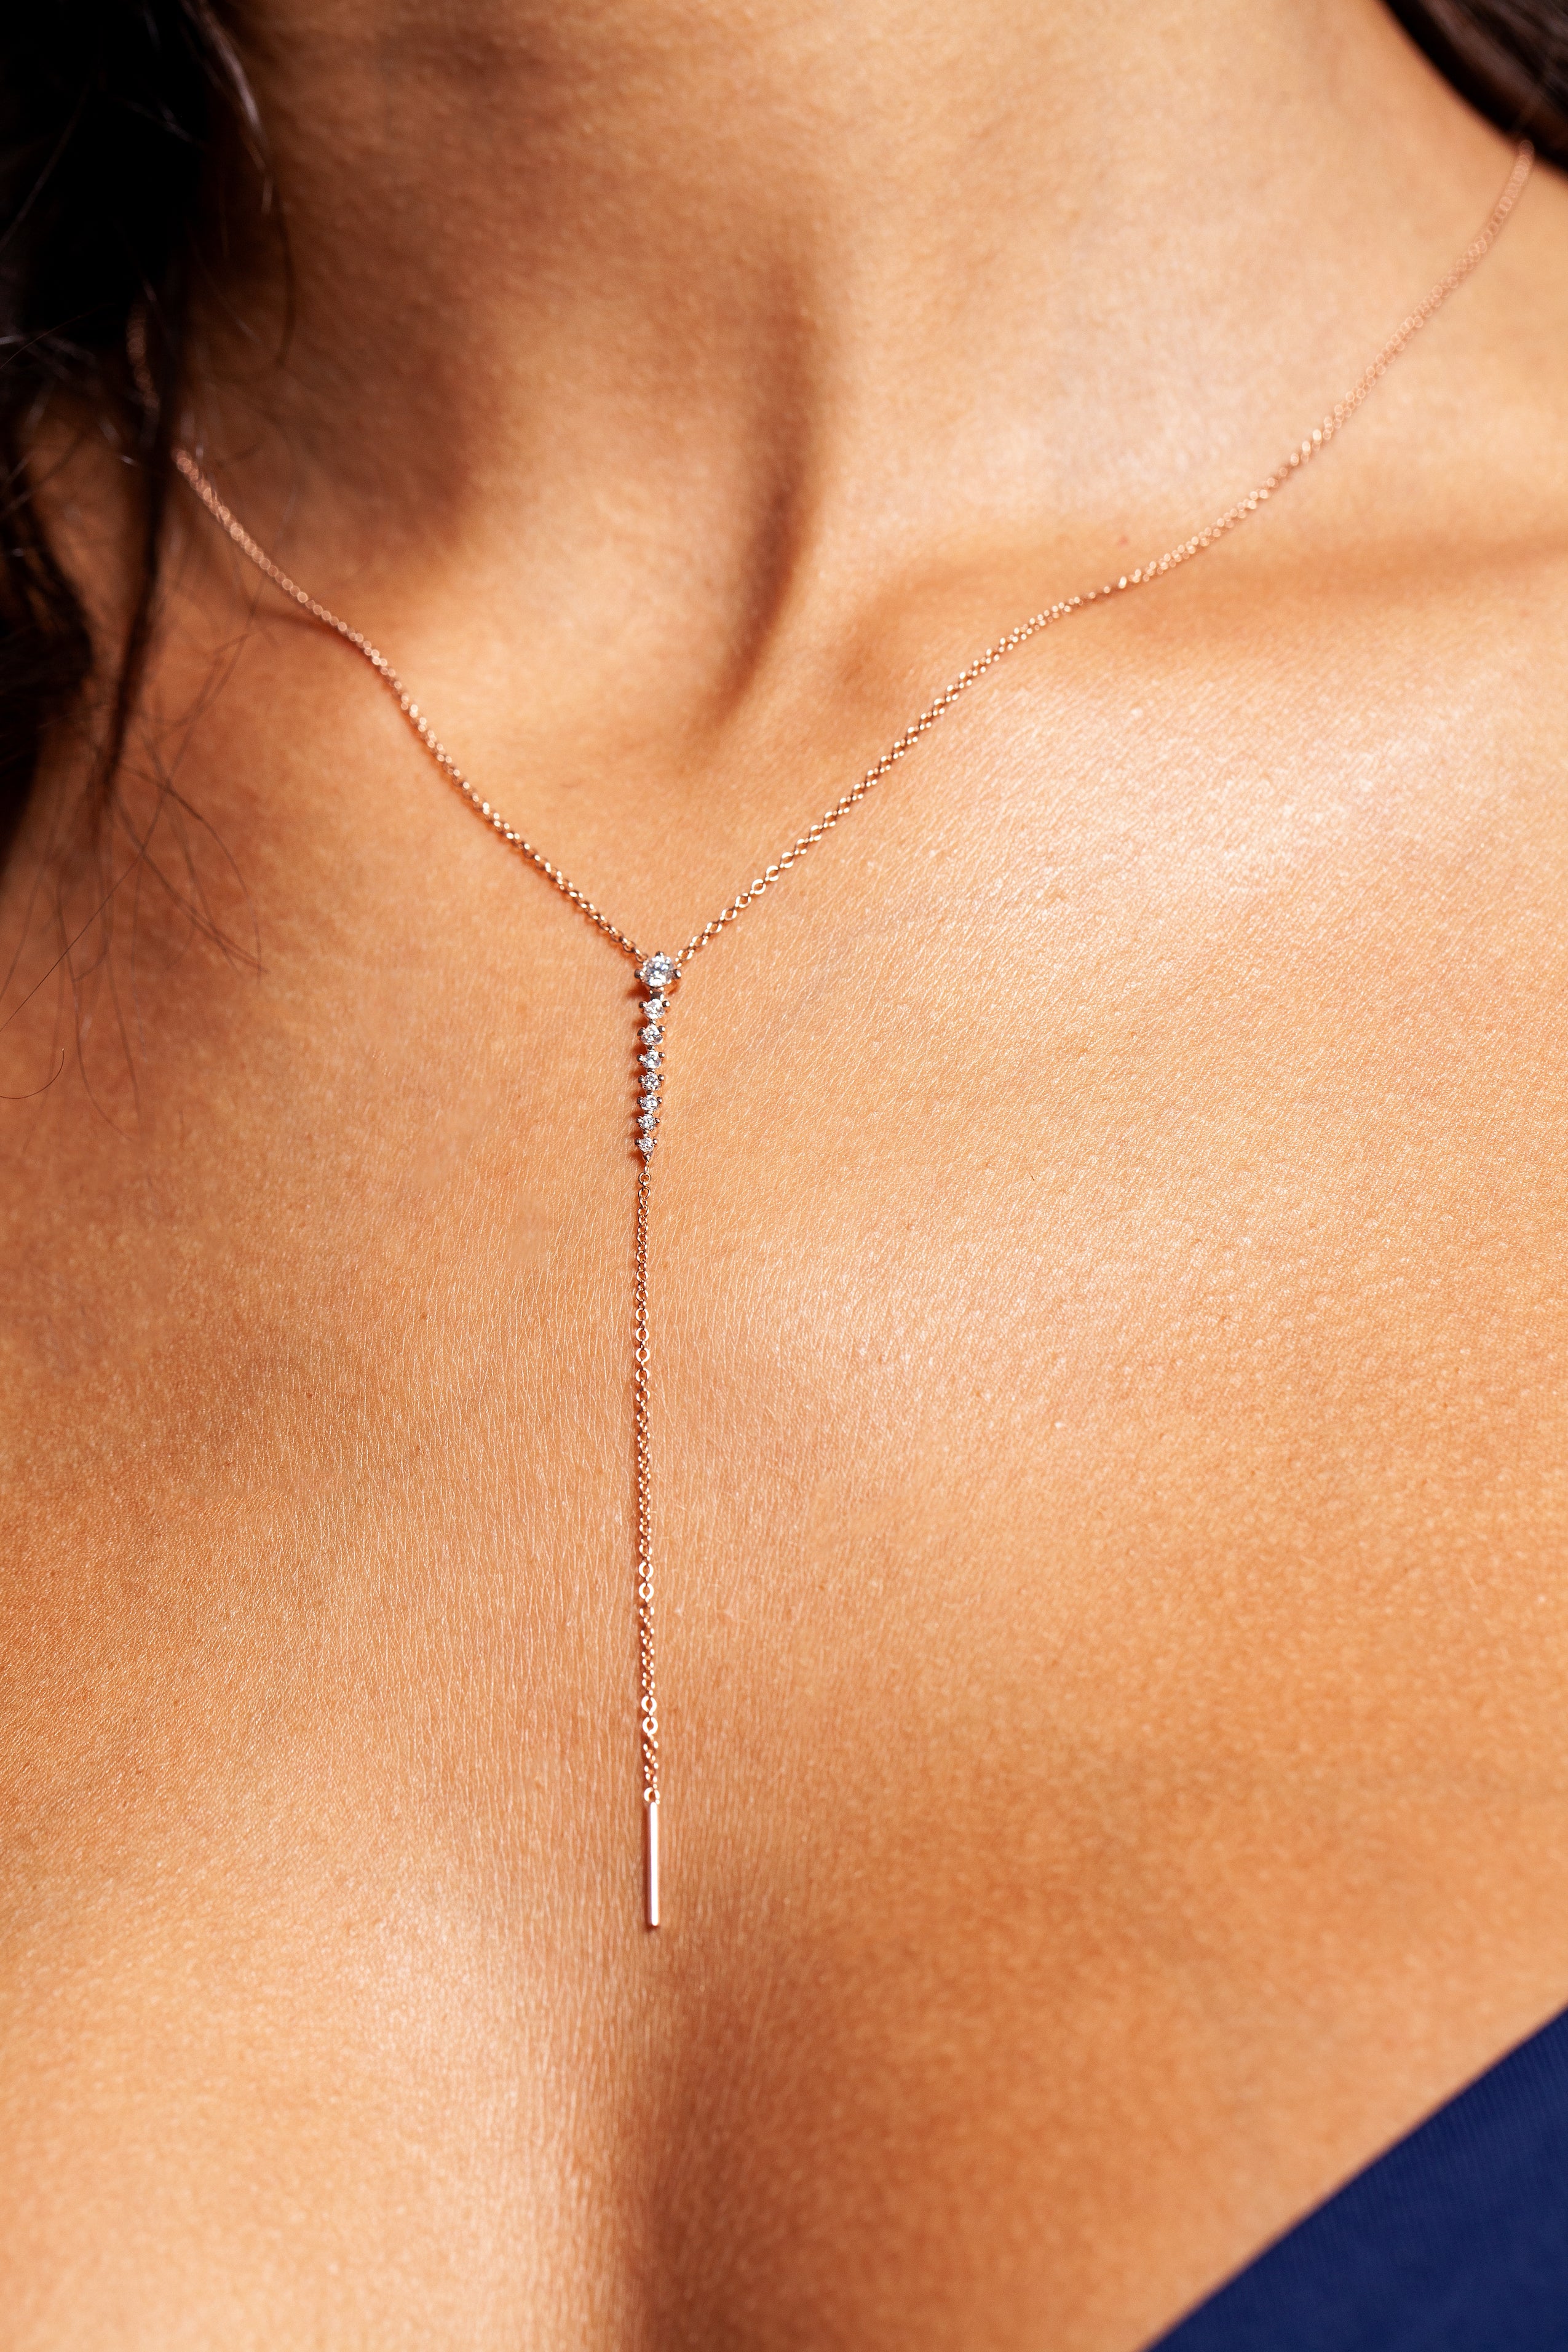 Sophie Ratner Diamond Encrusted Love Lock Necklace in White